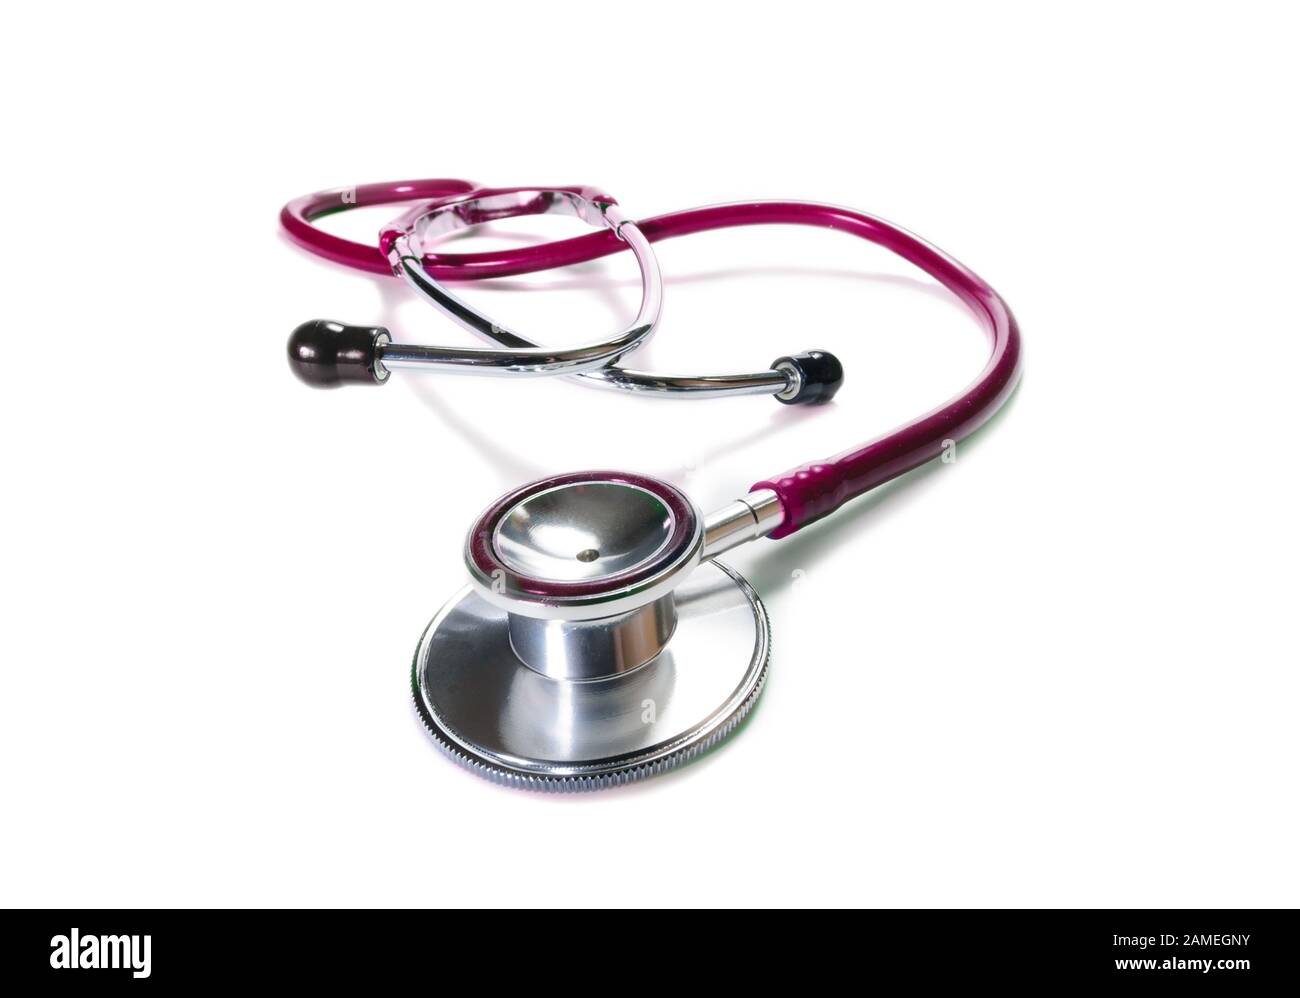 Hospital stethoscope on white background. Health care concept Stock Photo